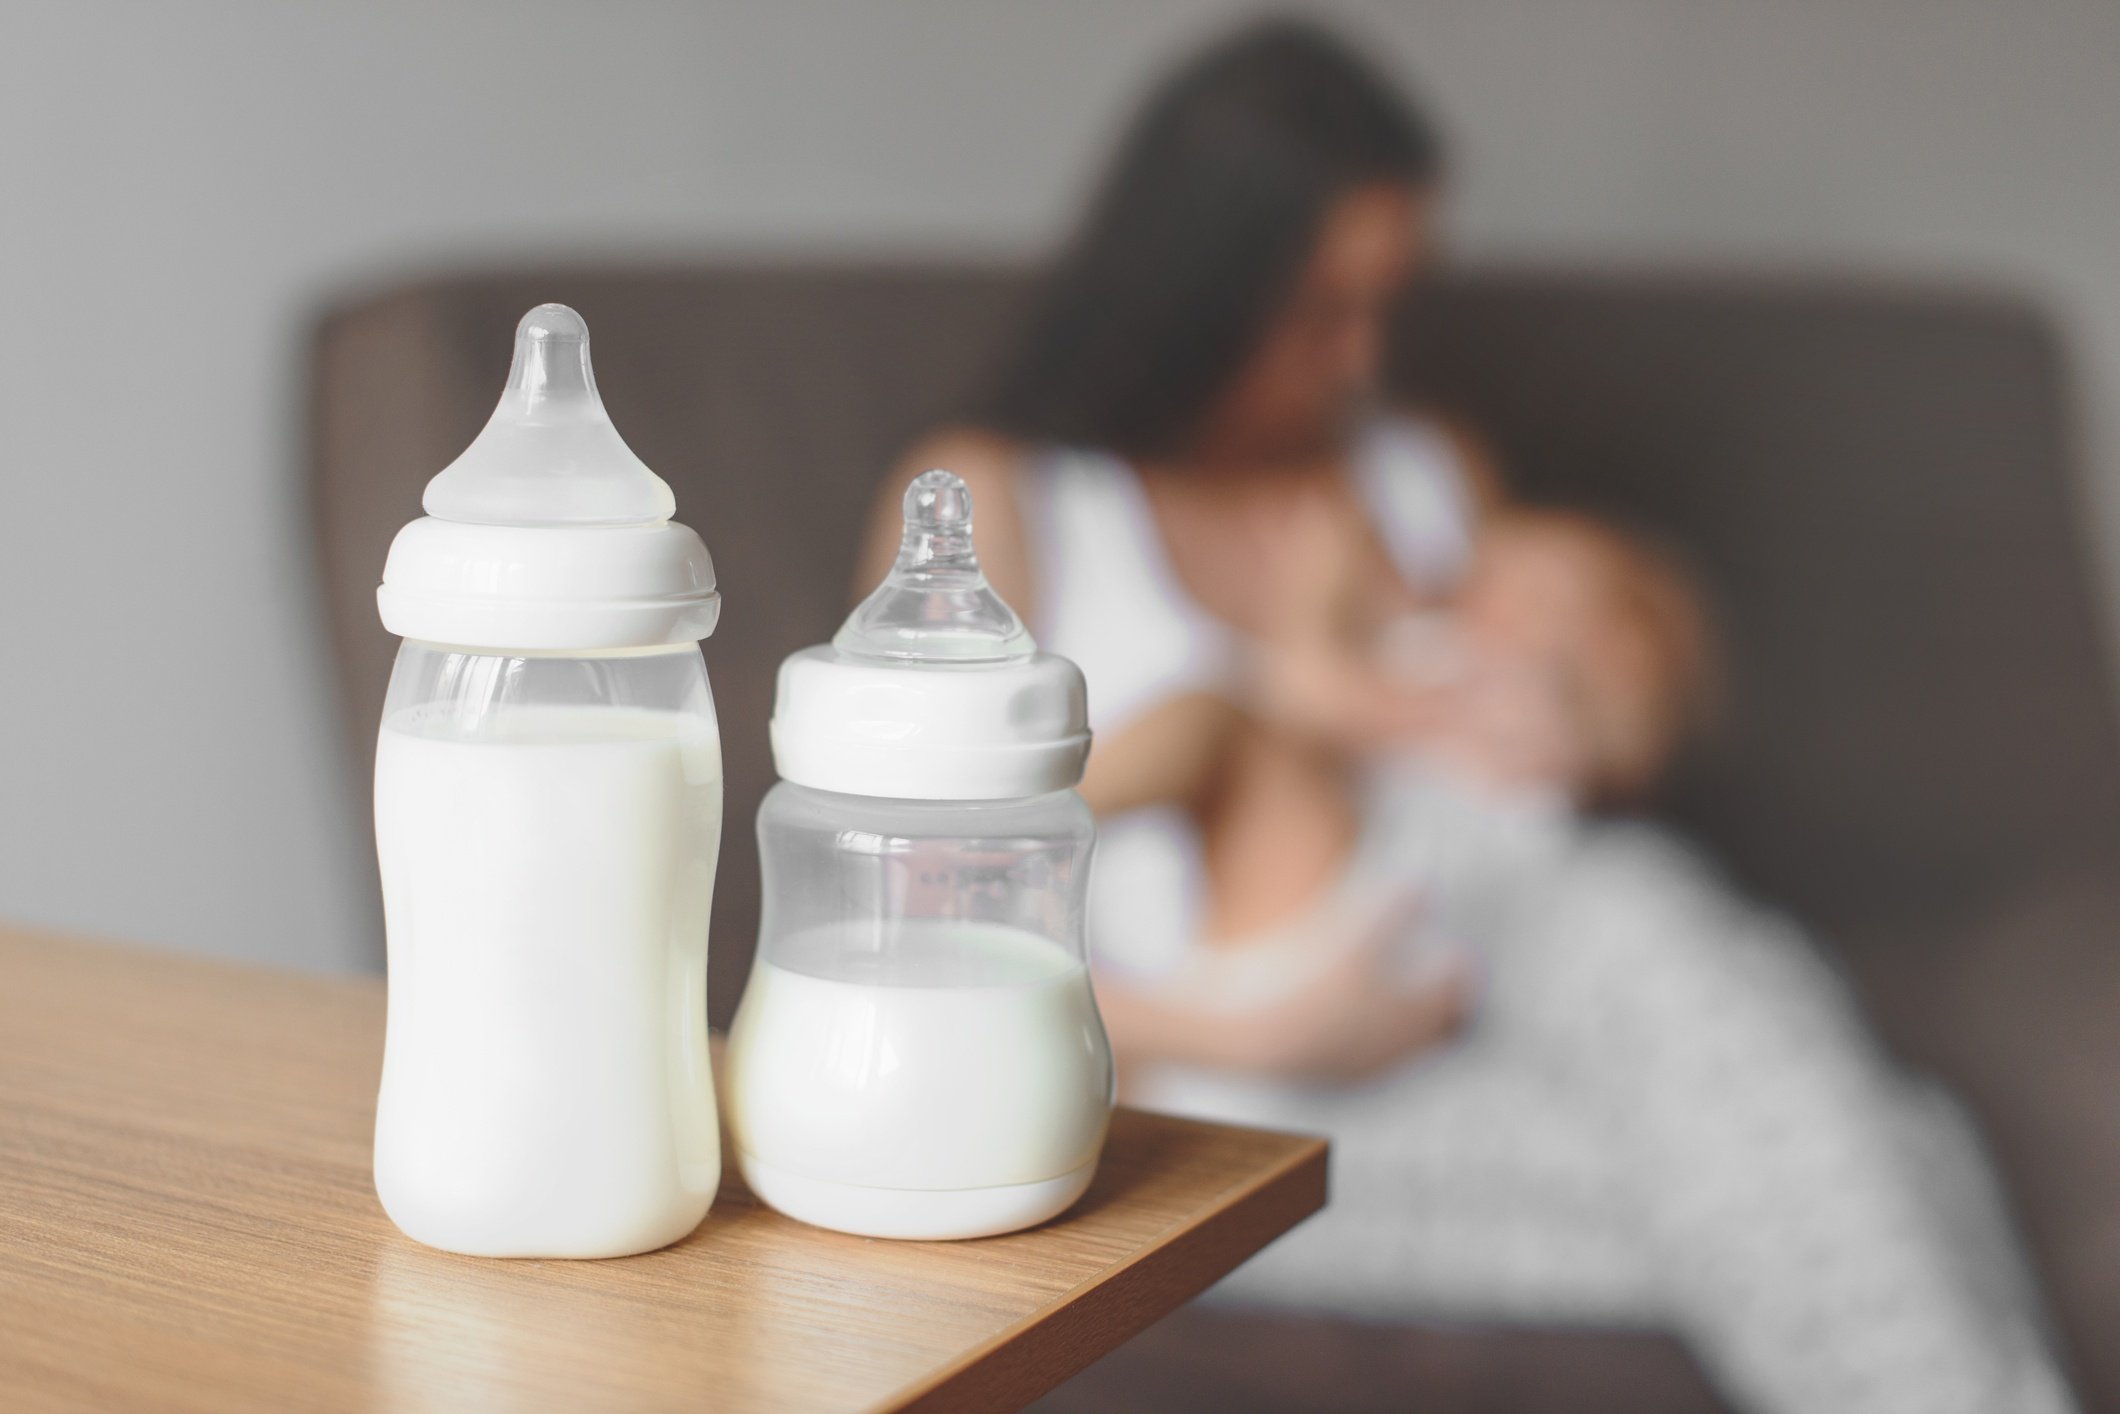 Breast Milk Storage and Feeding